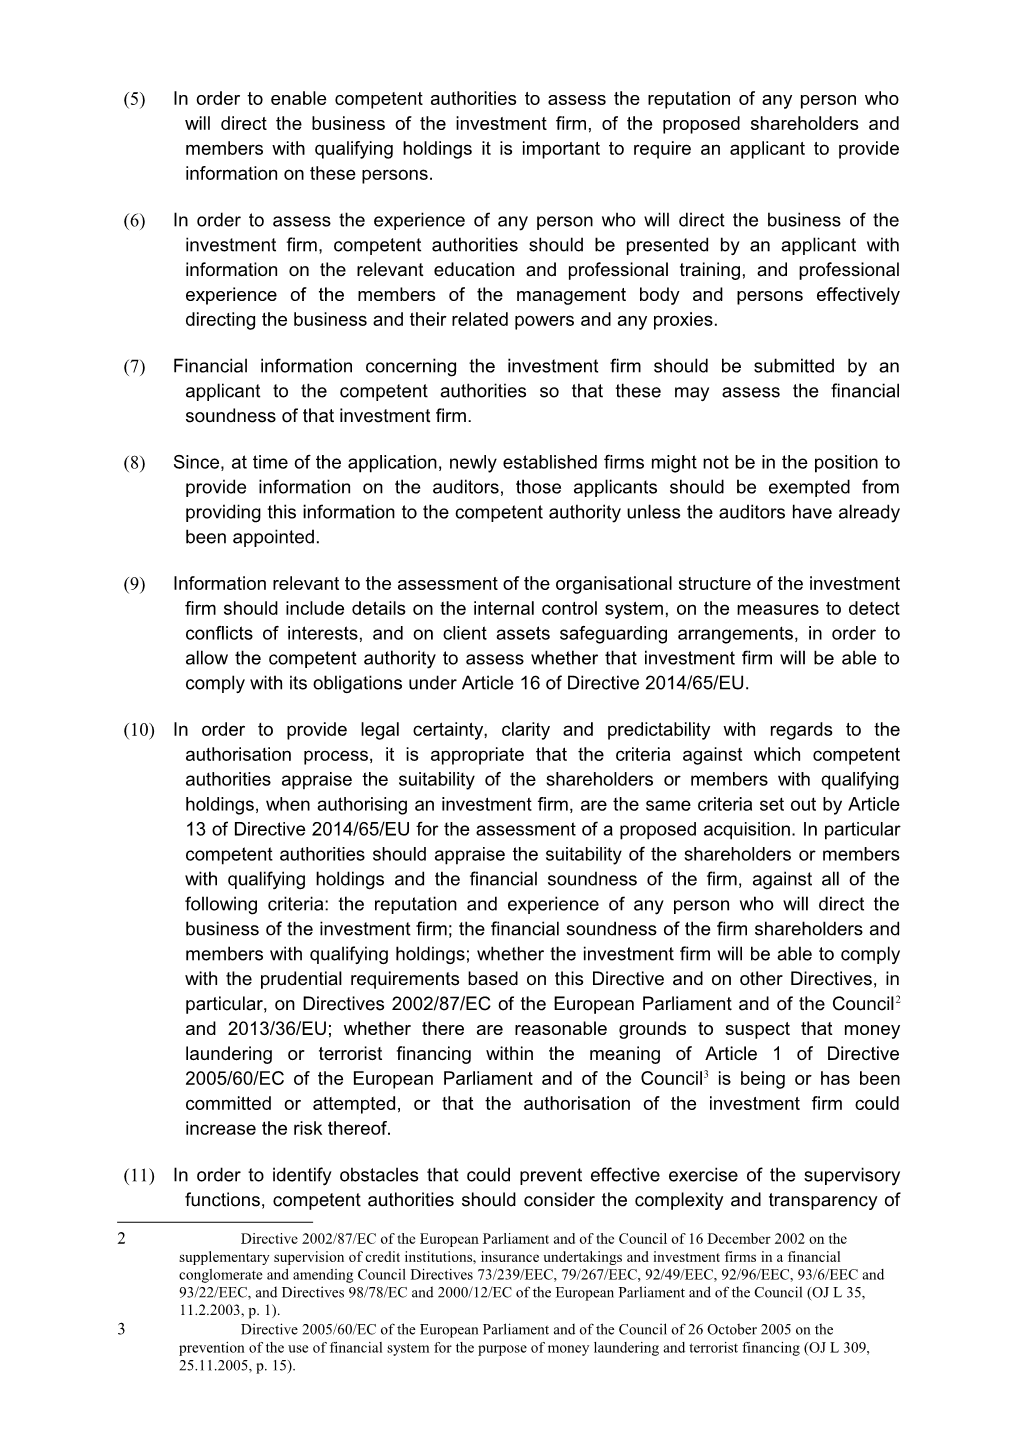 RTS 1: Draft Regulatory Technical Standards Under Article 7(4) of Mifid II